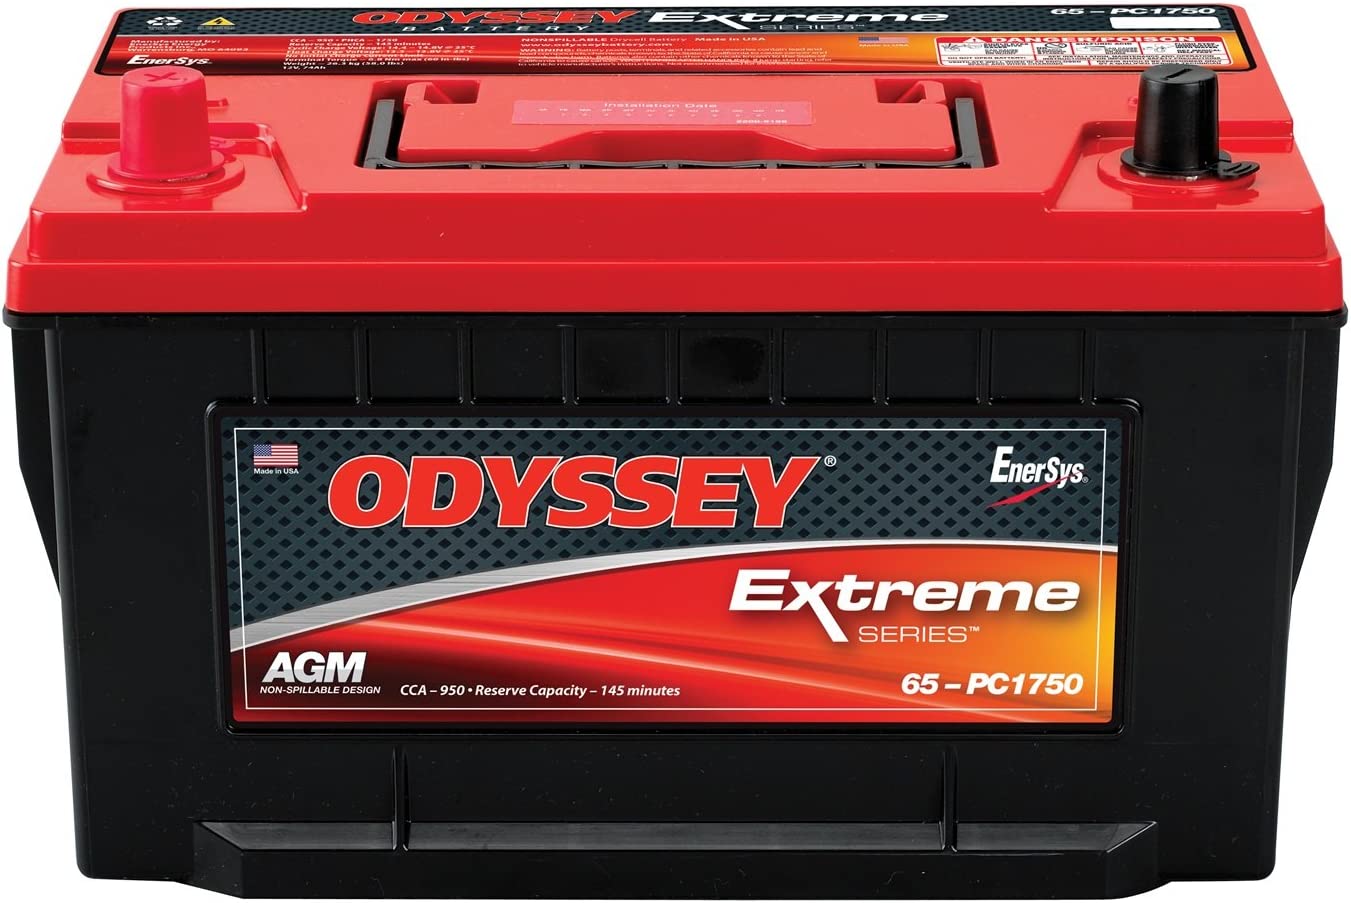 ODYSSEY 65 PC1750T Automotive and LTV Battery